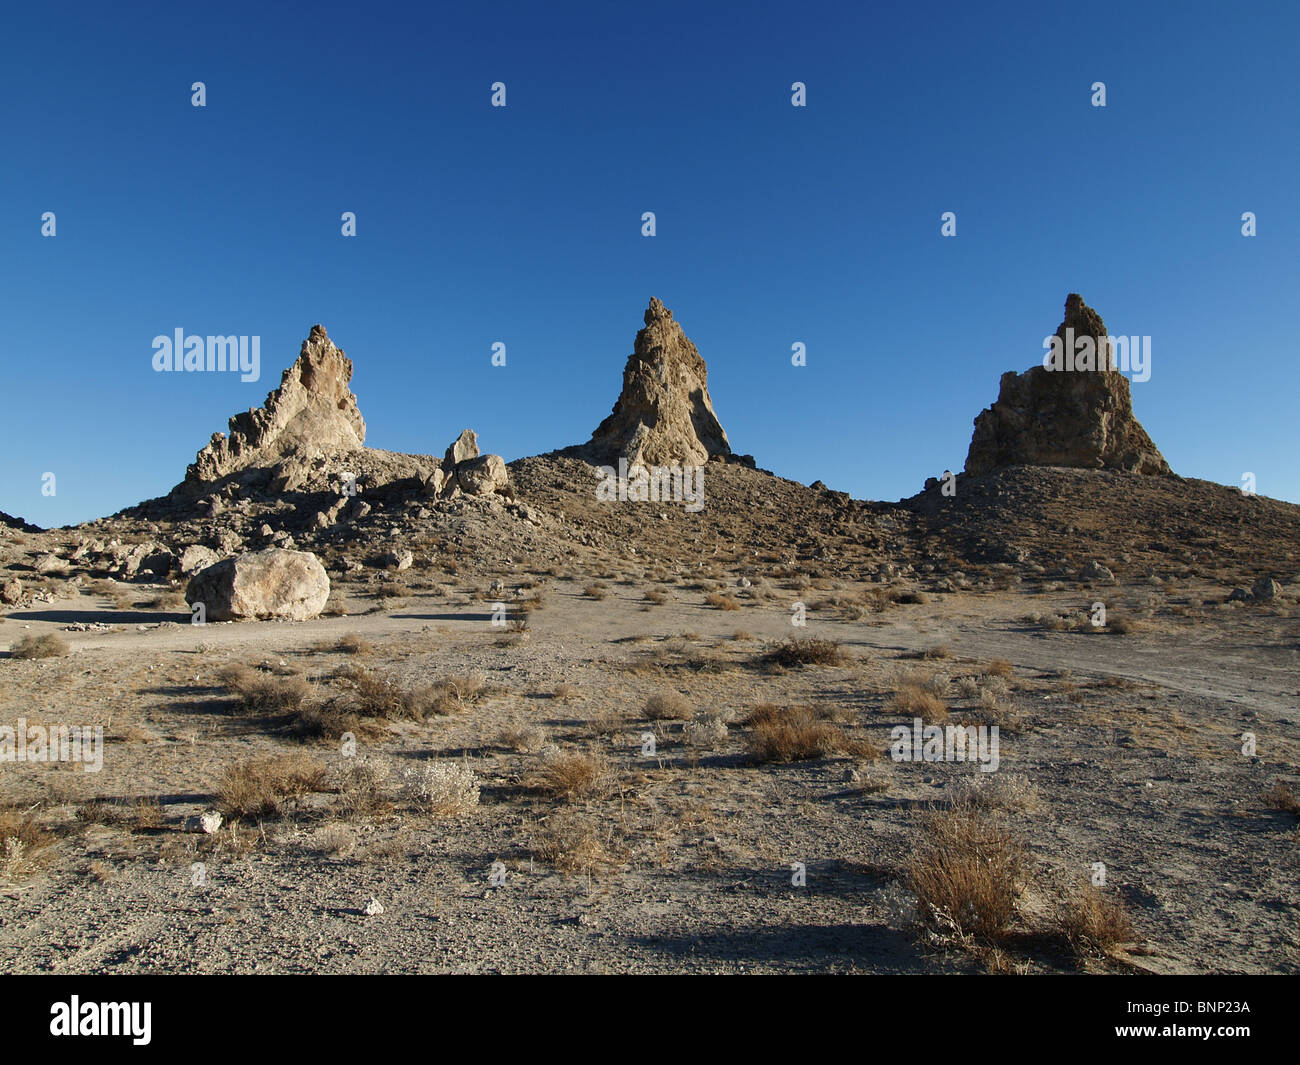 Trona Pinnacles in California's Mojave Desert. Stock Photo